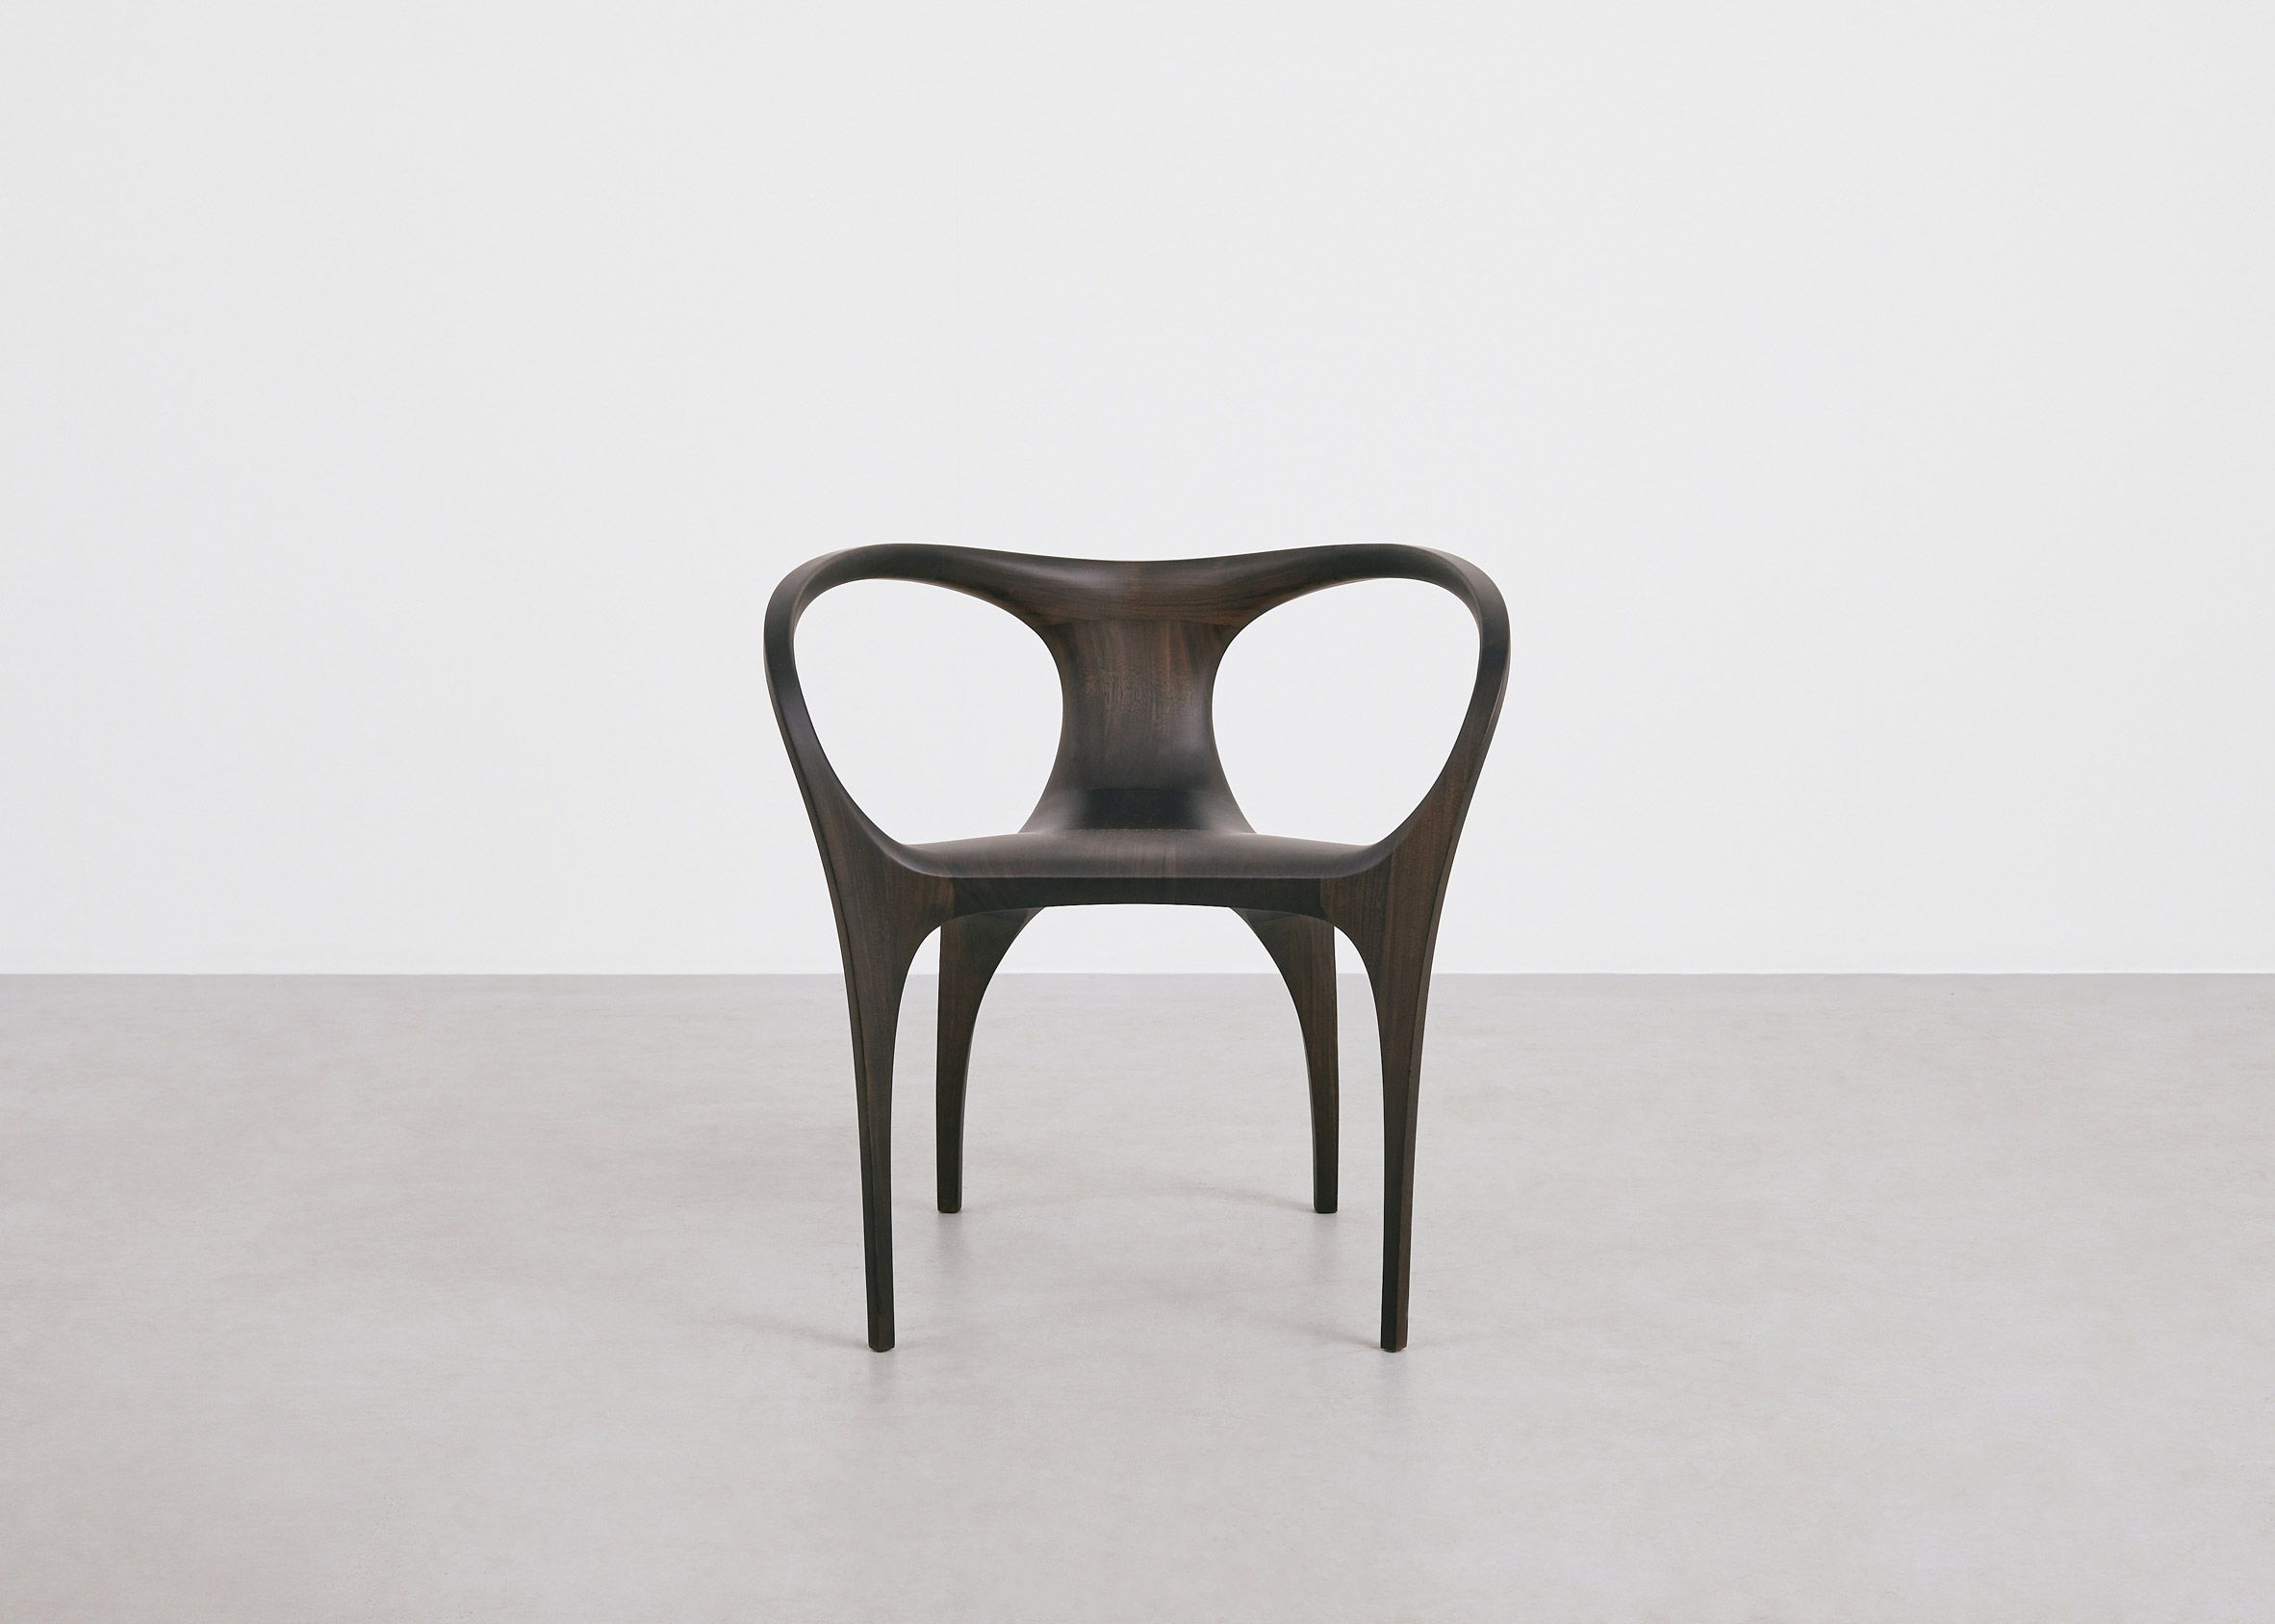 David Gill Gallery will present Zaha Hadid's UltraStellar chair